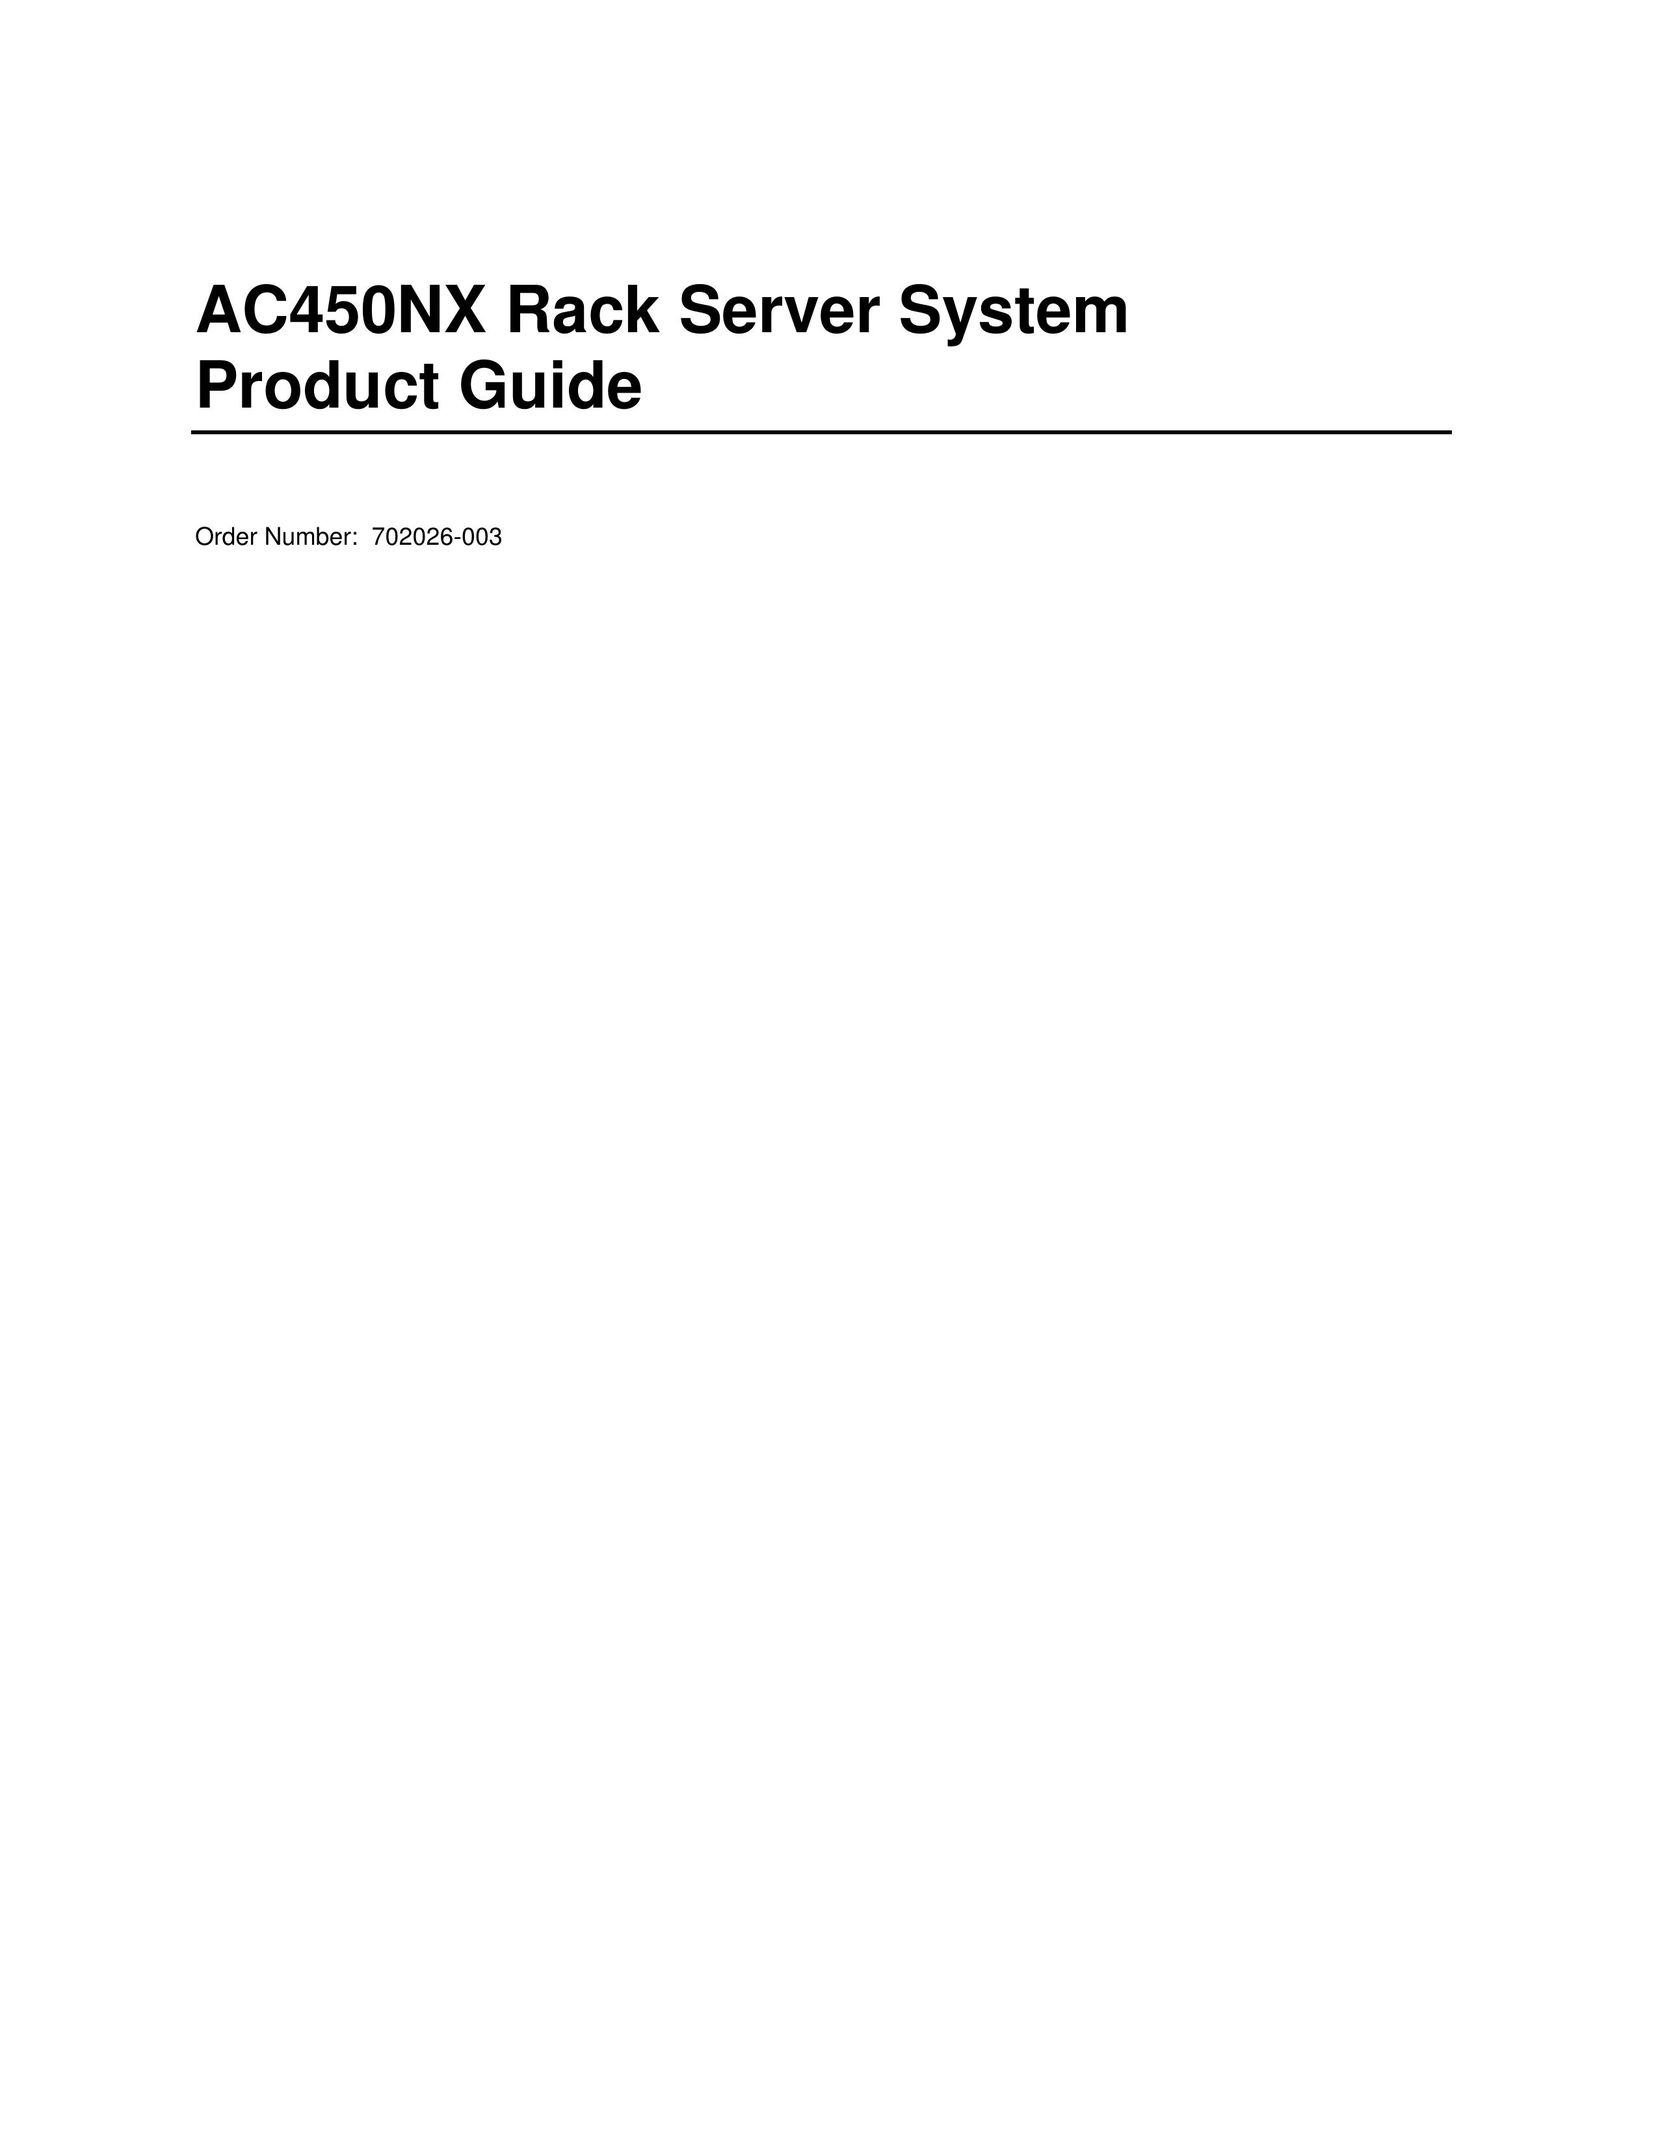 Intel AC450NX Stereo System User Manual